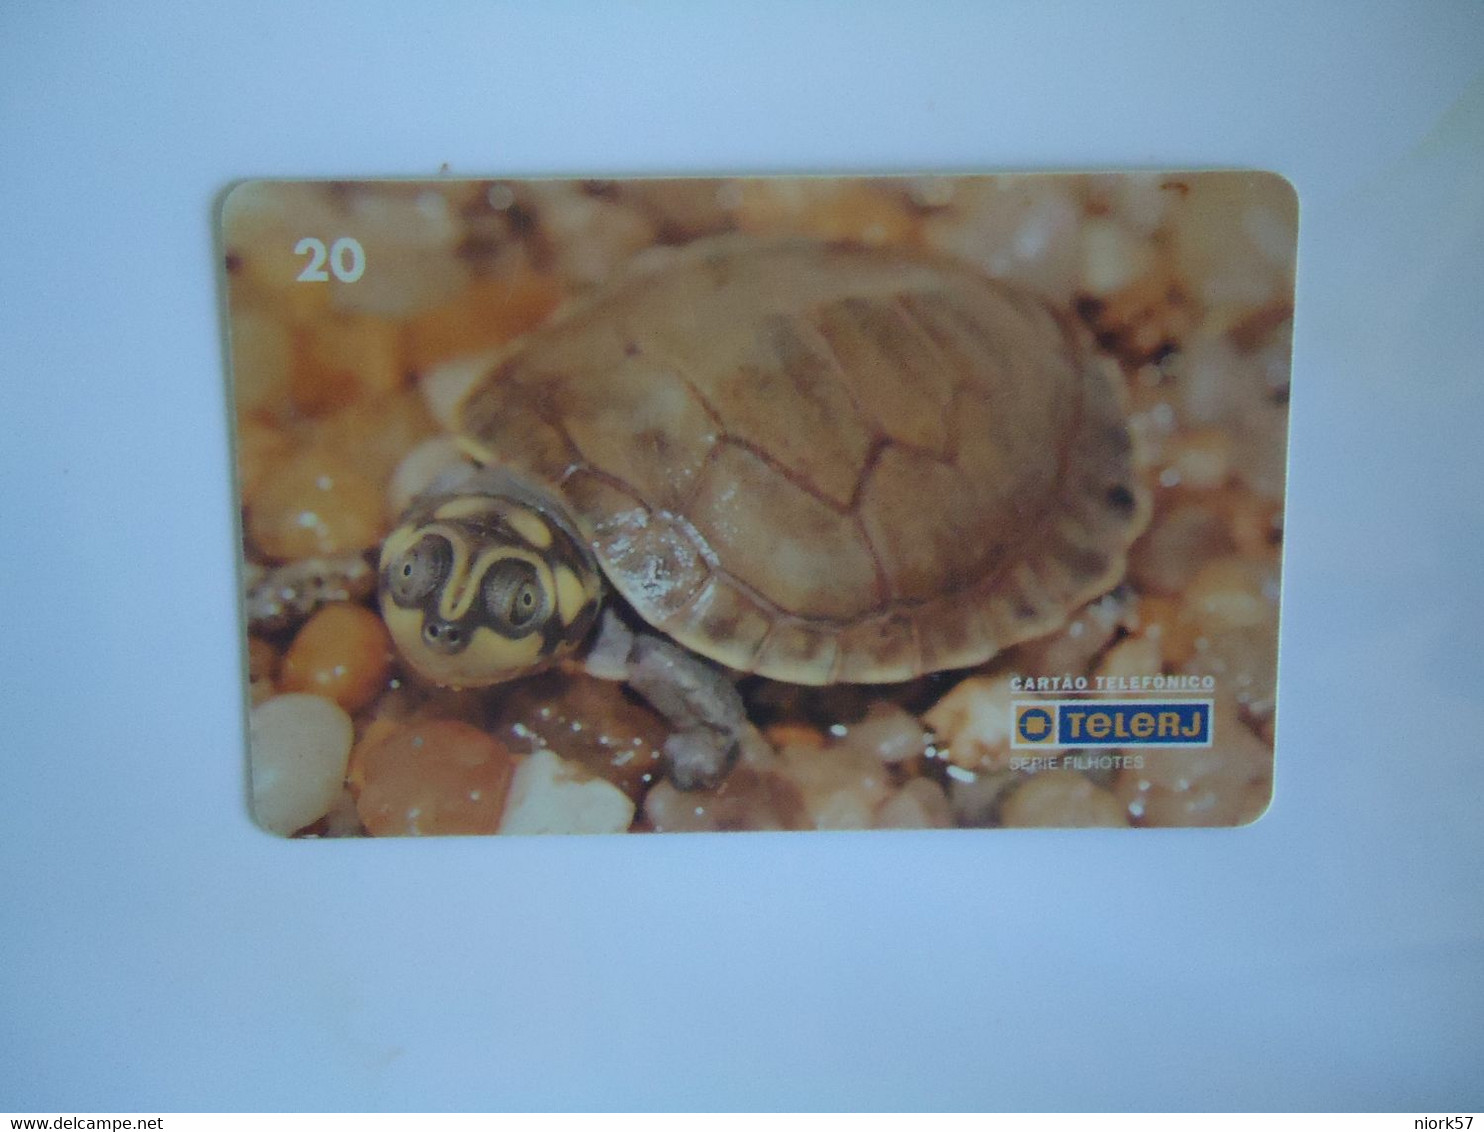 BRAZIL USED CARDS ANIMALS TURTLES - Schildkröten